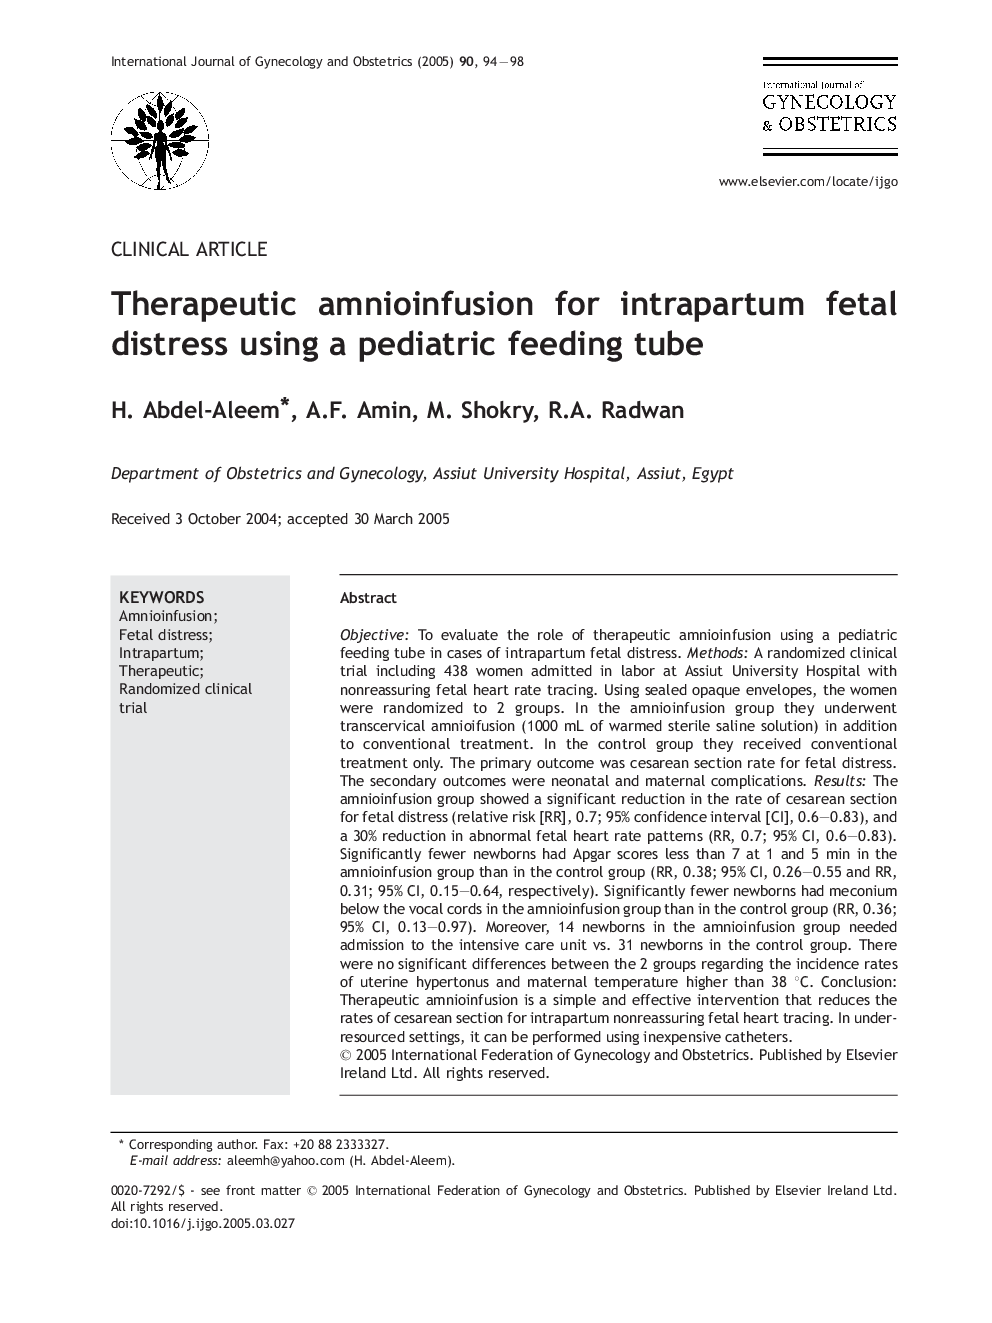 Therapeutic amnioinfusion for intrapartum fetal distress using a pediatric feeding tube